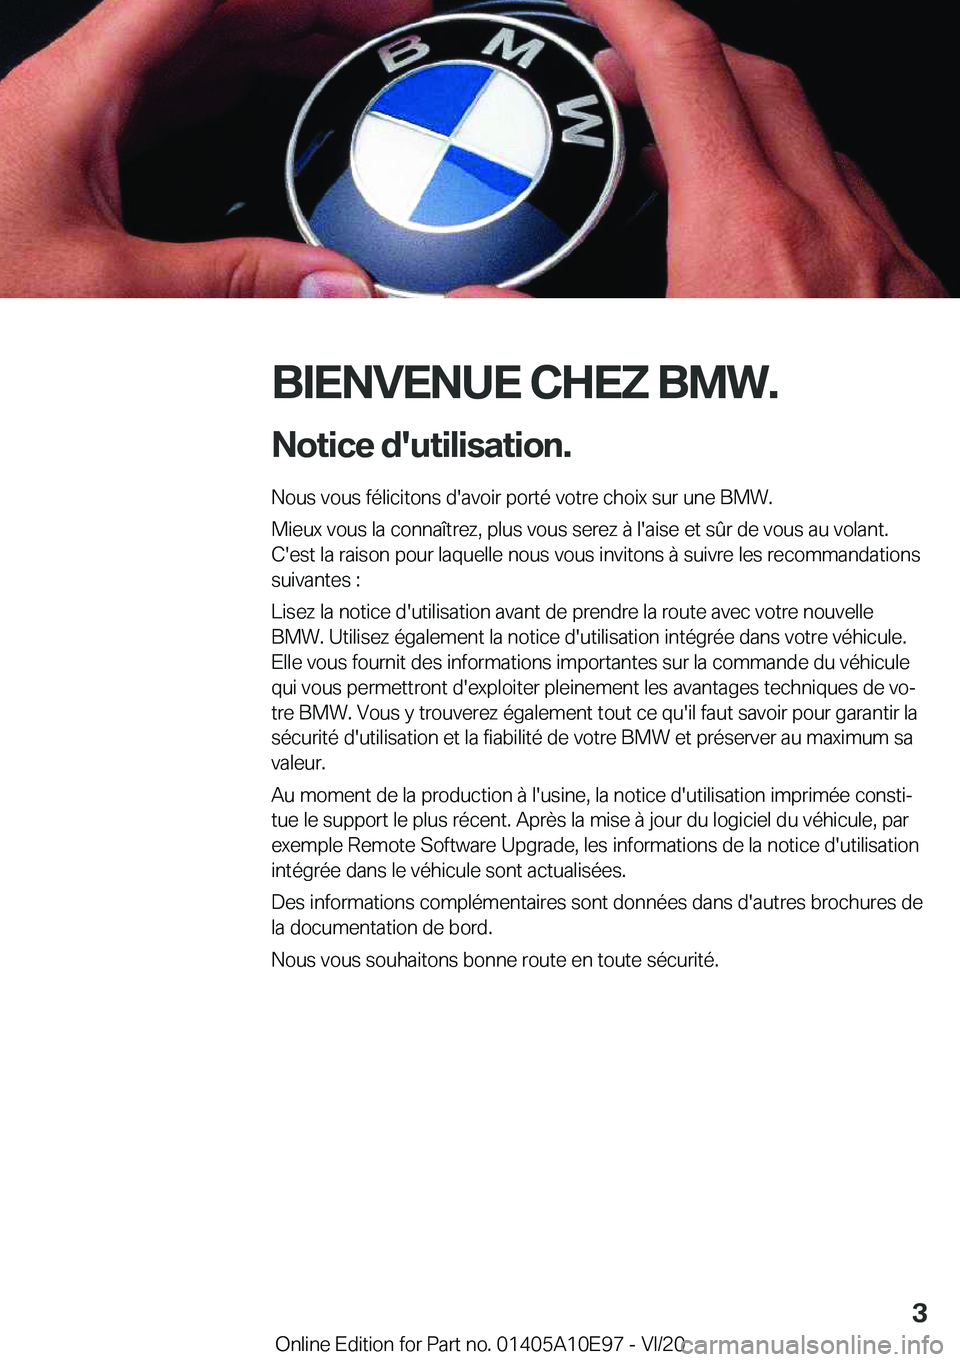 BMW X3 2021  Notices Demploi (in French) �B�I�E�N�V�E�N�U�E��C�H�E�Z��B�M�W�.�N�o�t�i�c�e��d�'�u�t�i�l�i�s�a�t�i�o�n�.
�N�o�u�s��v�o�u�s��f�é�l�i�c�i�t�o�n�s��d�'�a�v�o�i�r��p�o�r�t�é��v�o�t�r�e��c�h�o�i�x��s�u�r��u�n�e�